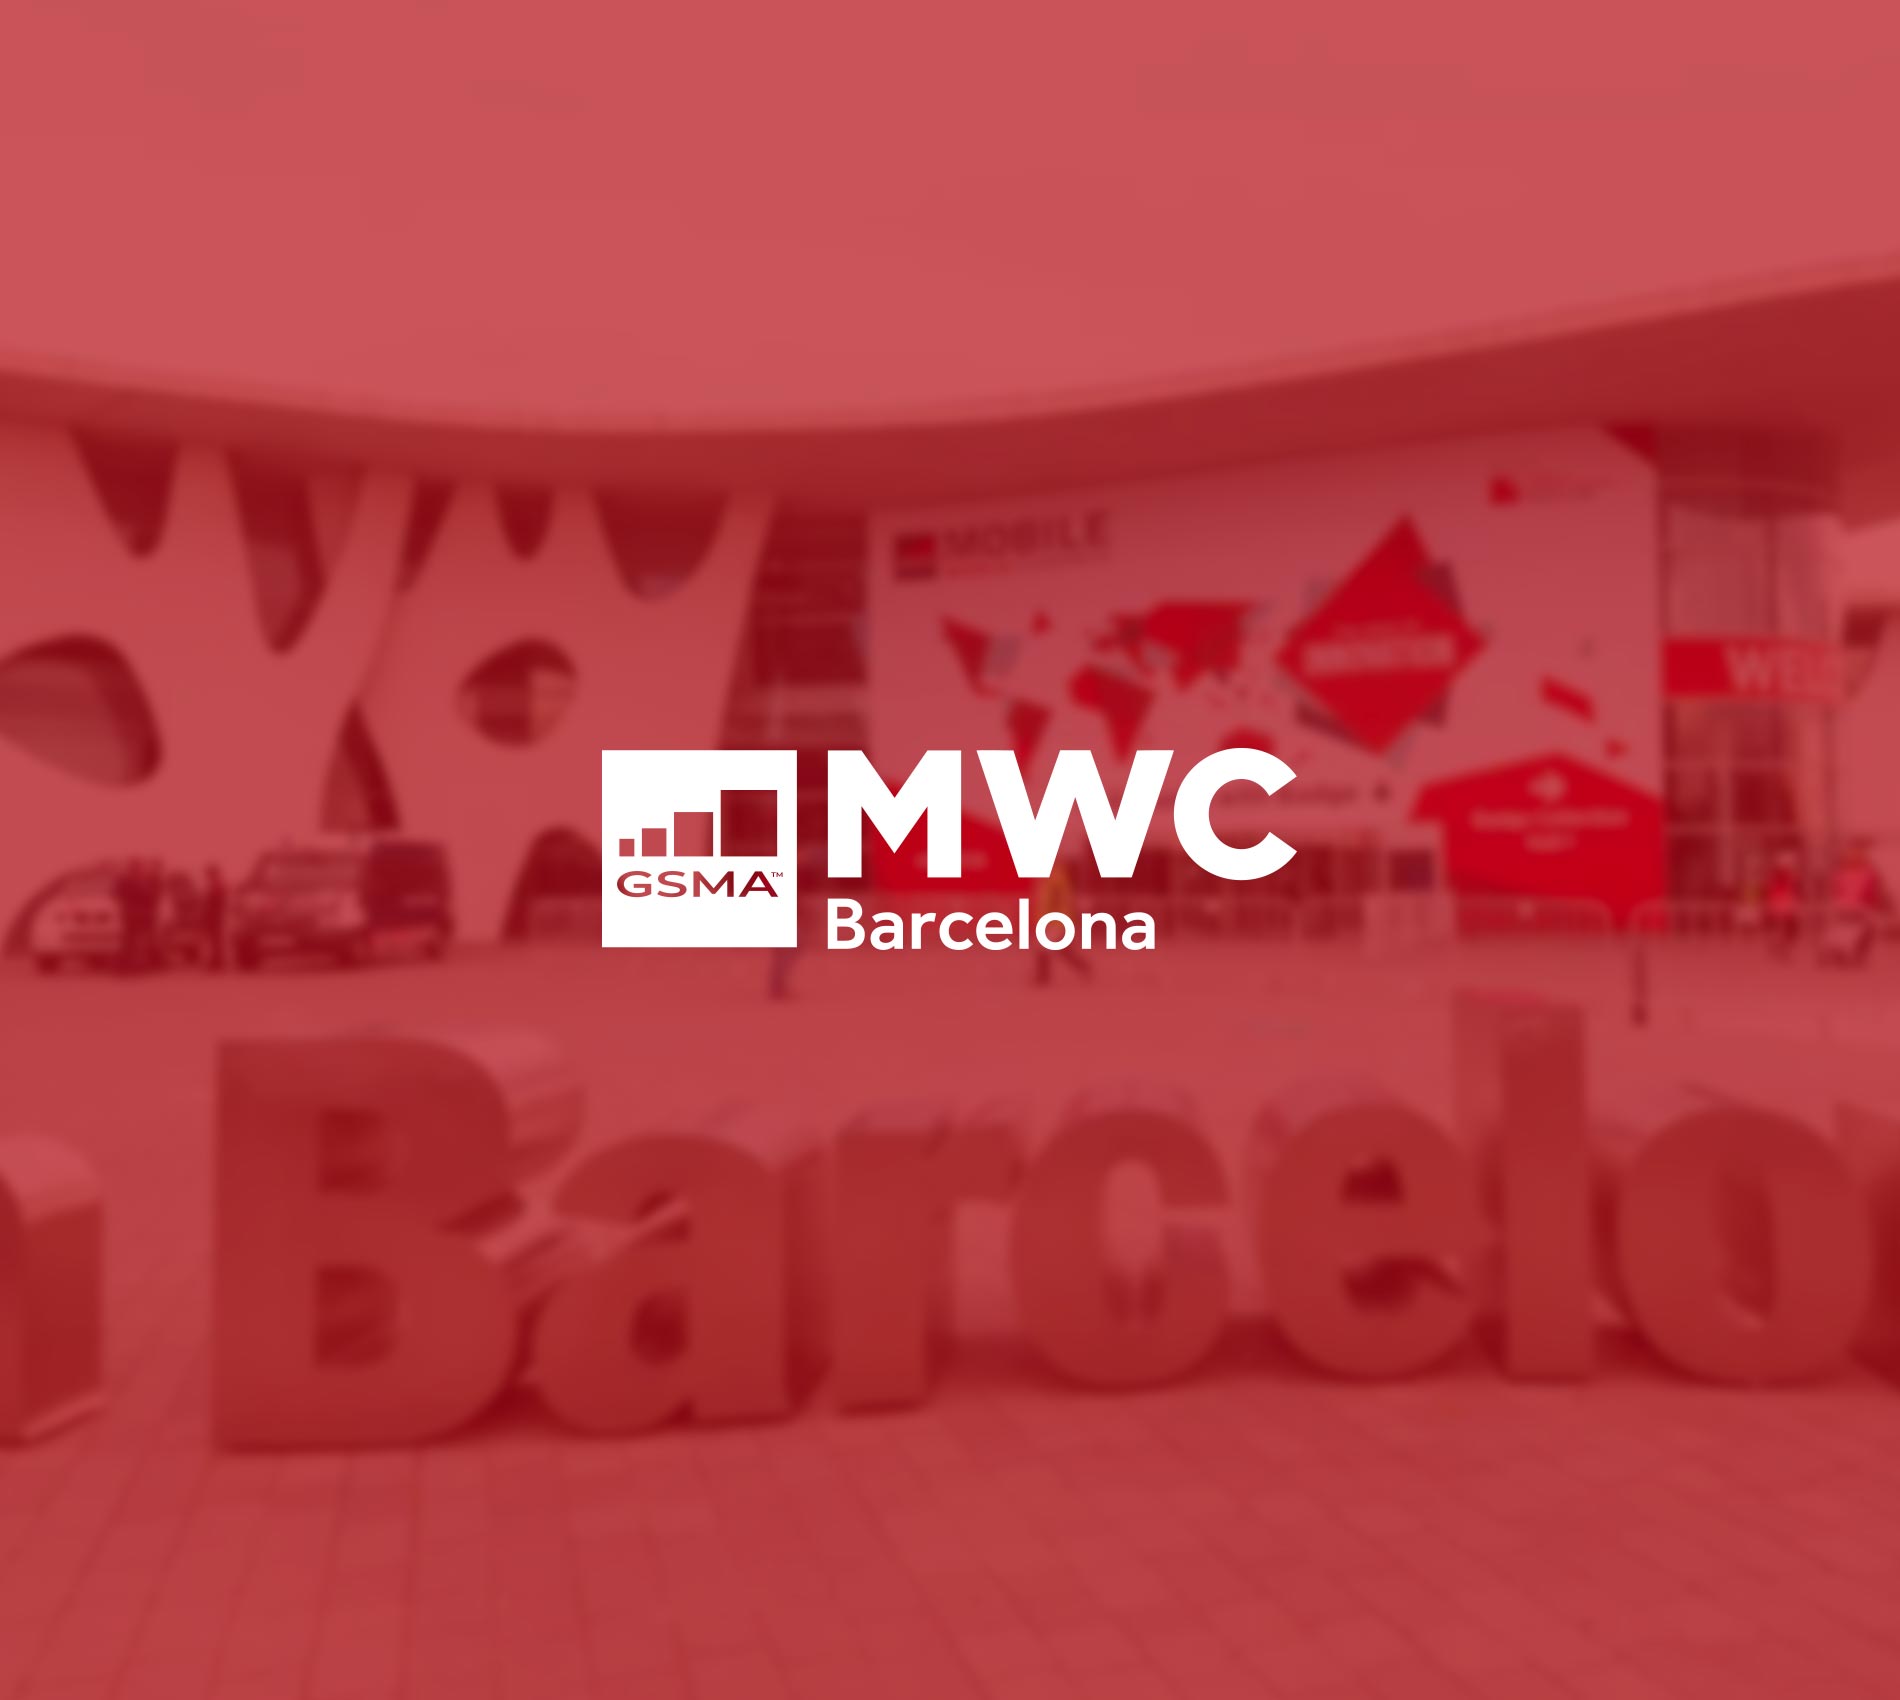 Mobile World Congress 2015, Barcelona | March 2015